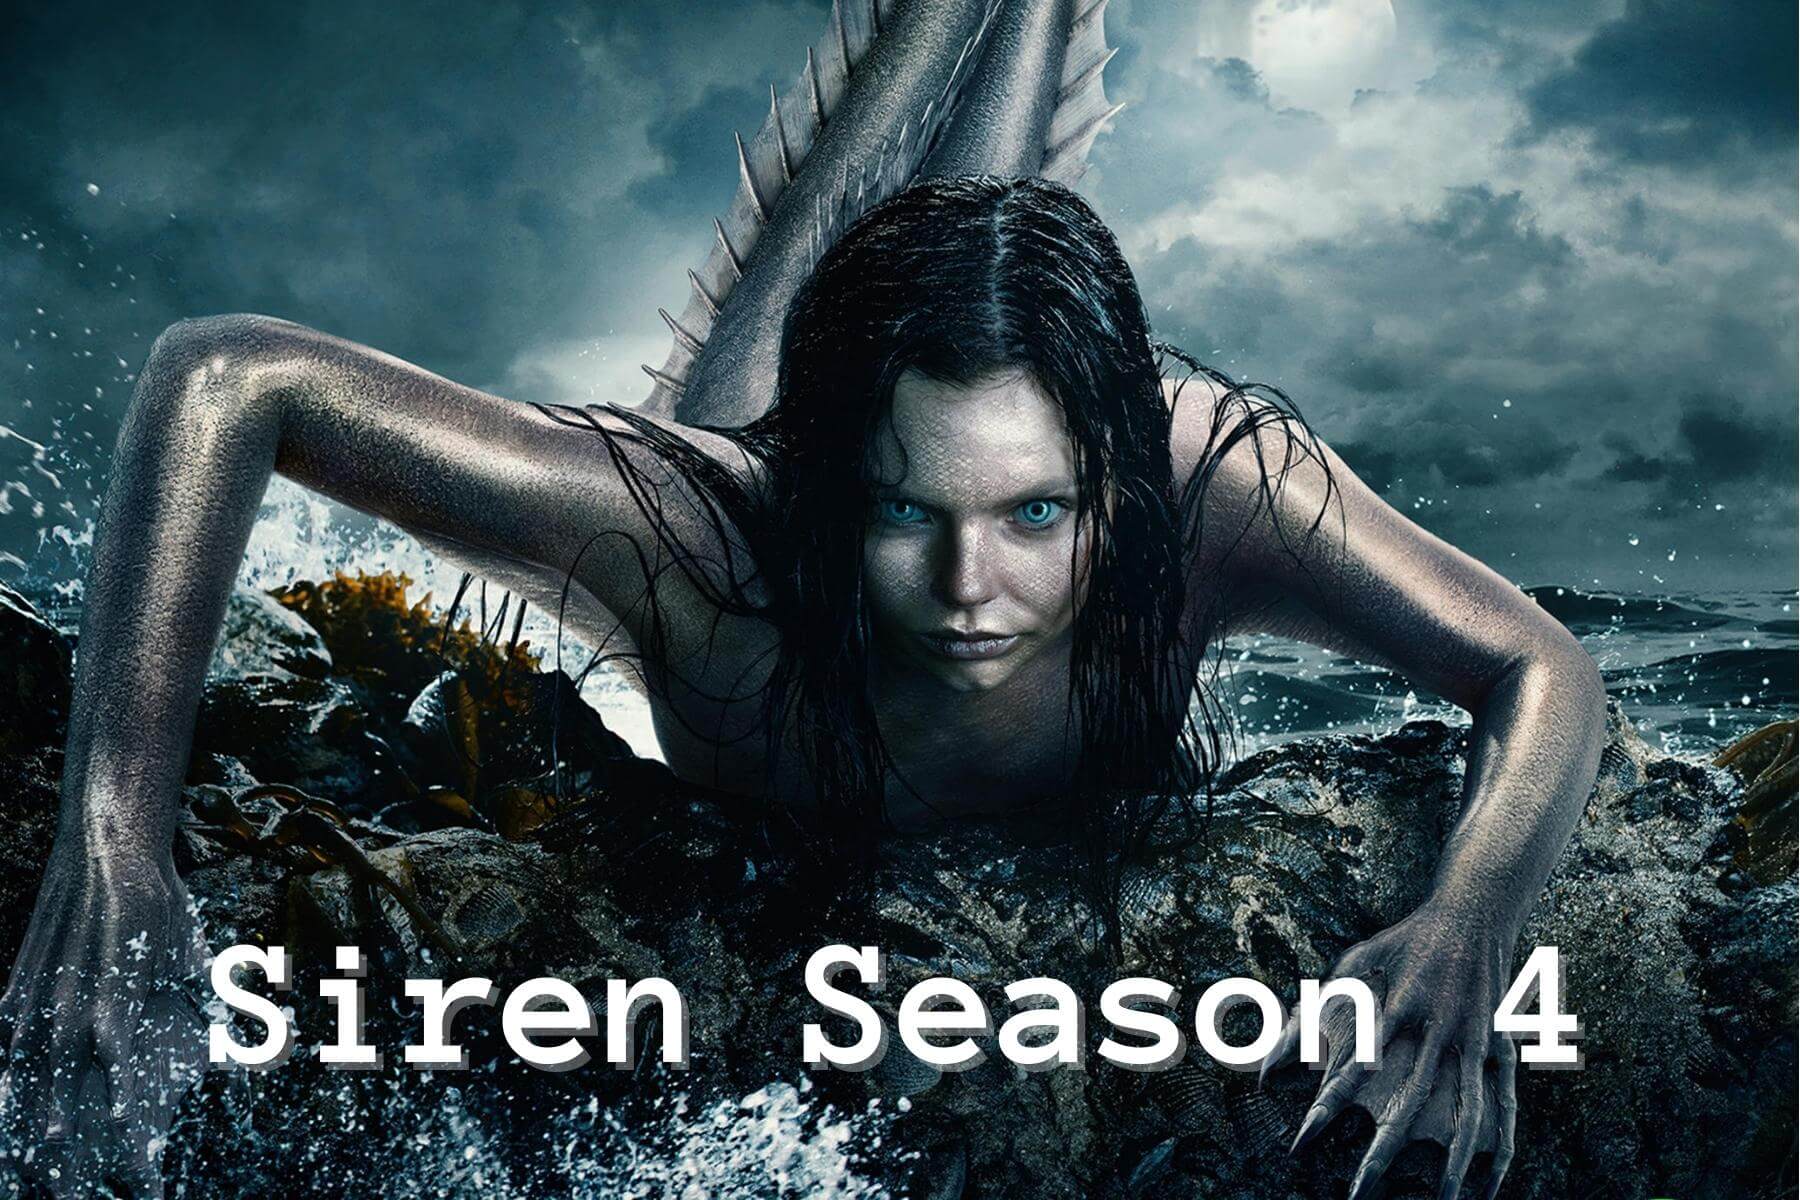 Siren season 4 netflix release date